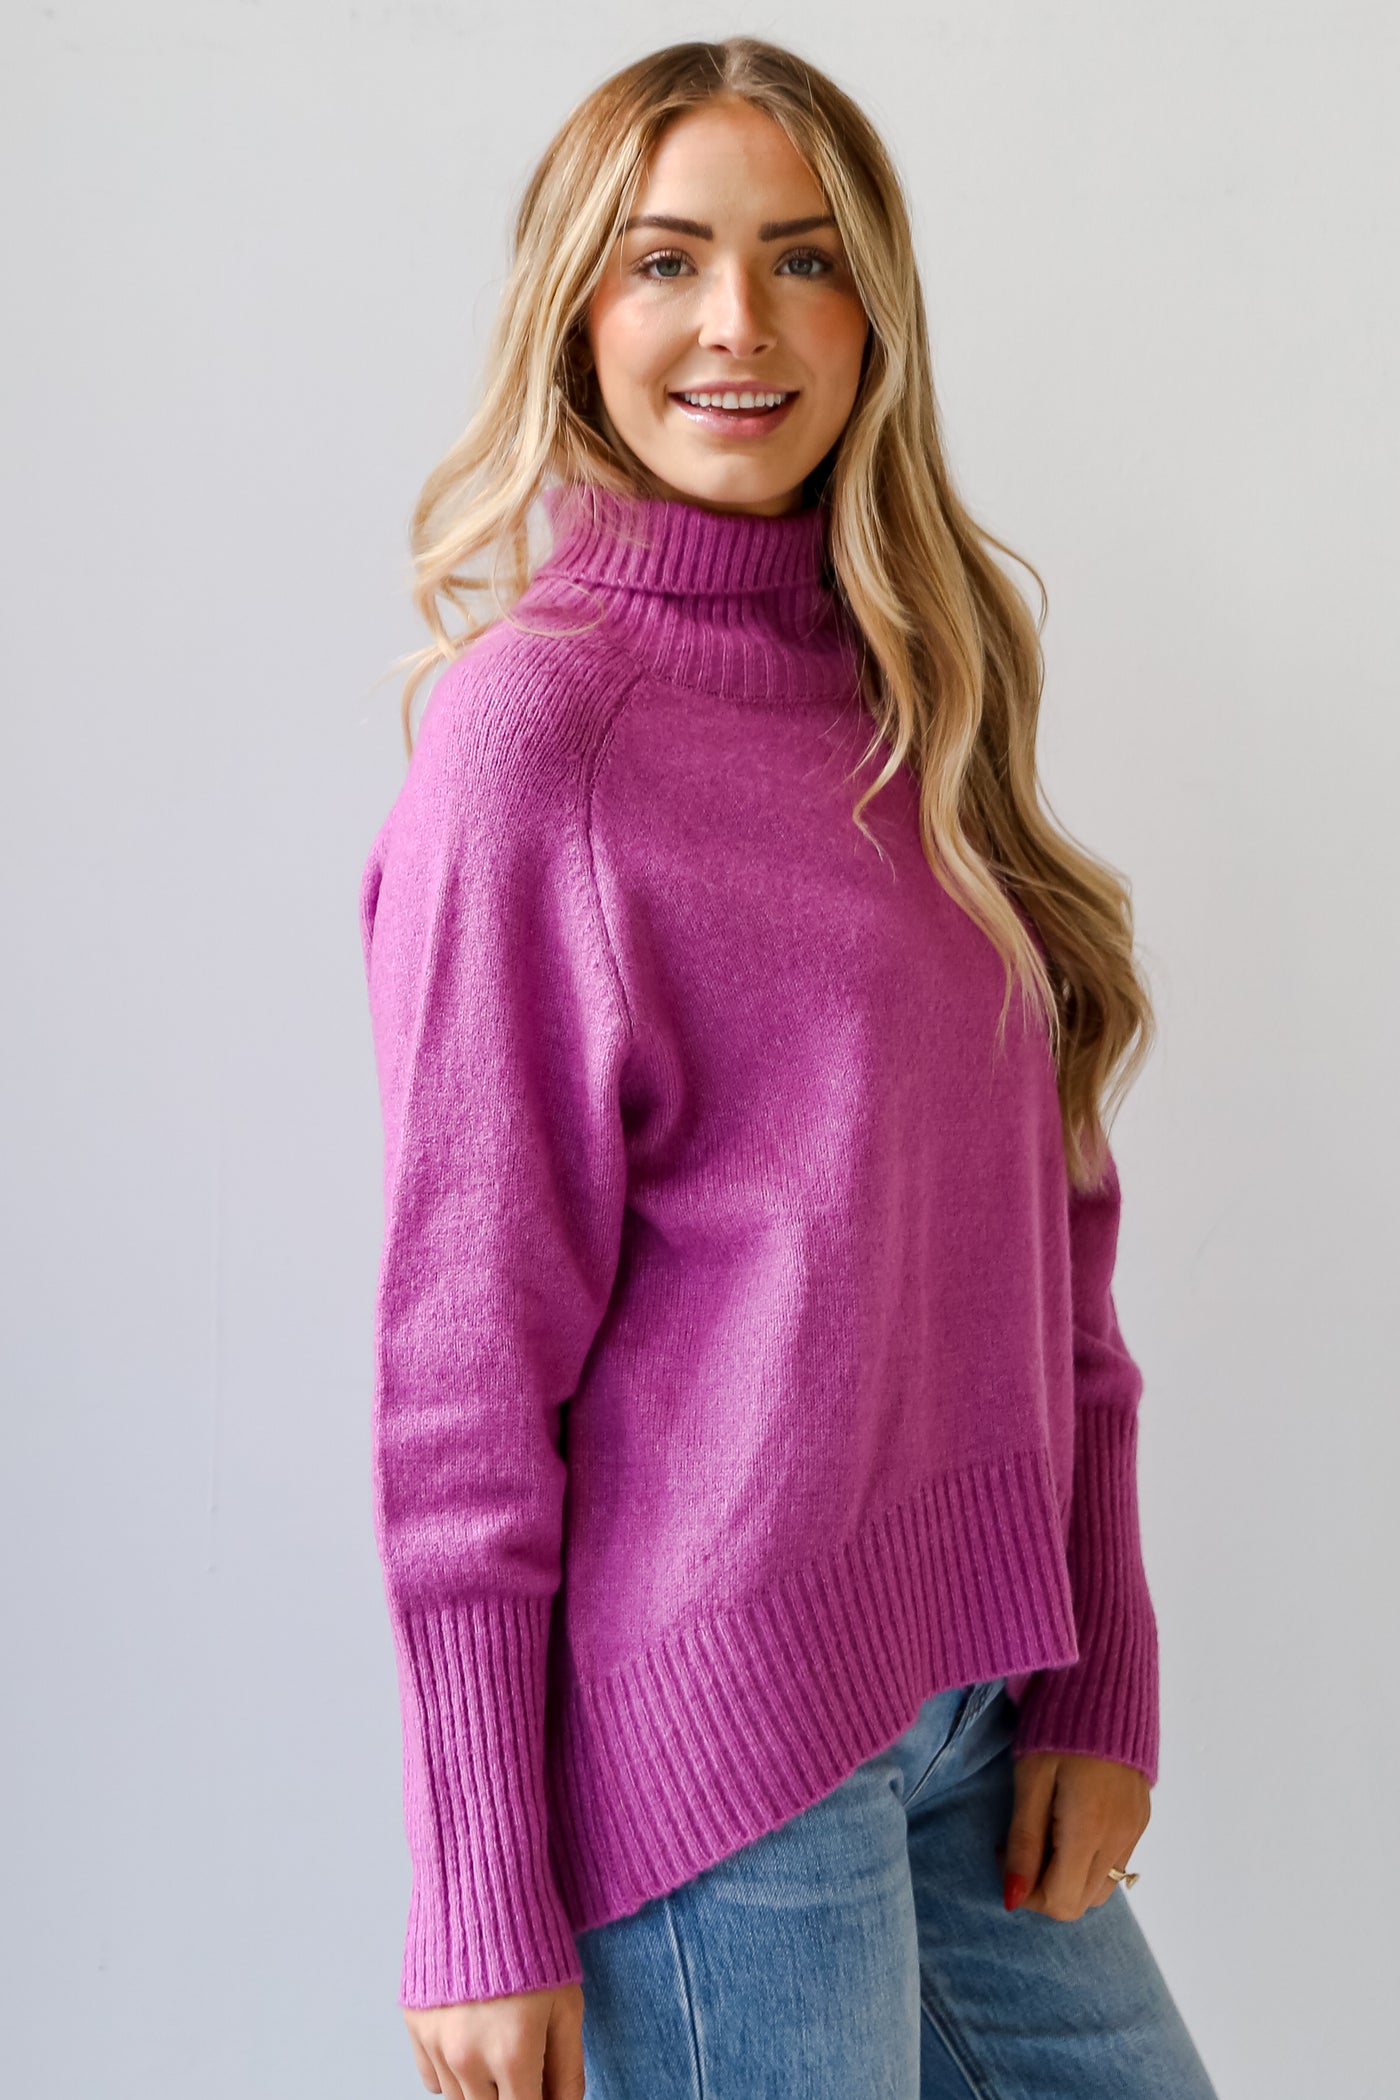 purple sweaters